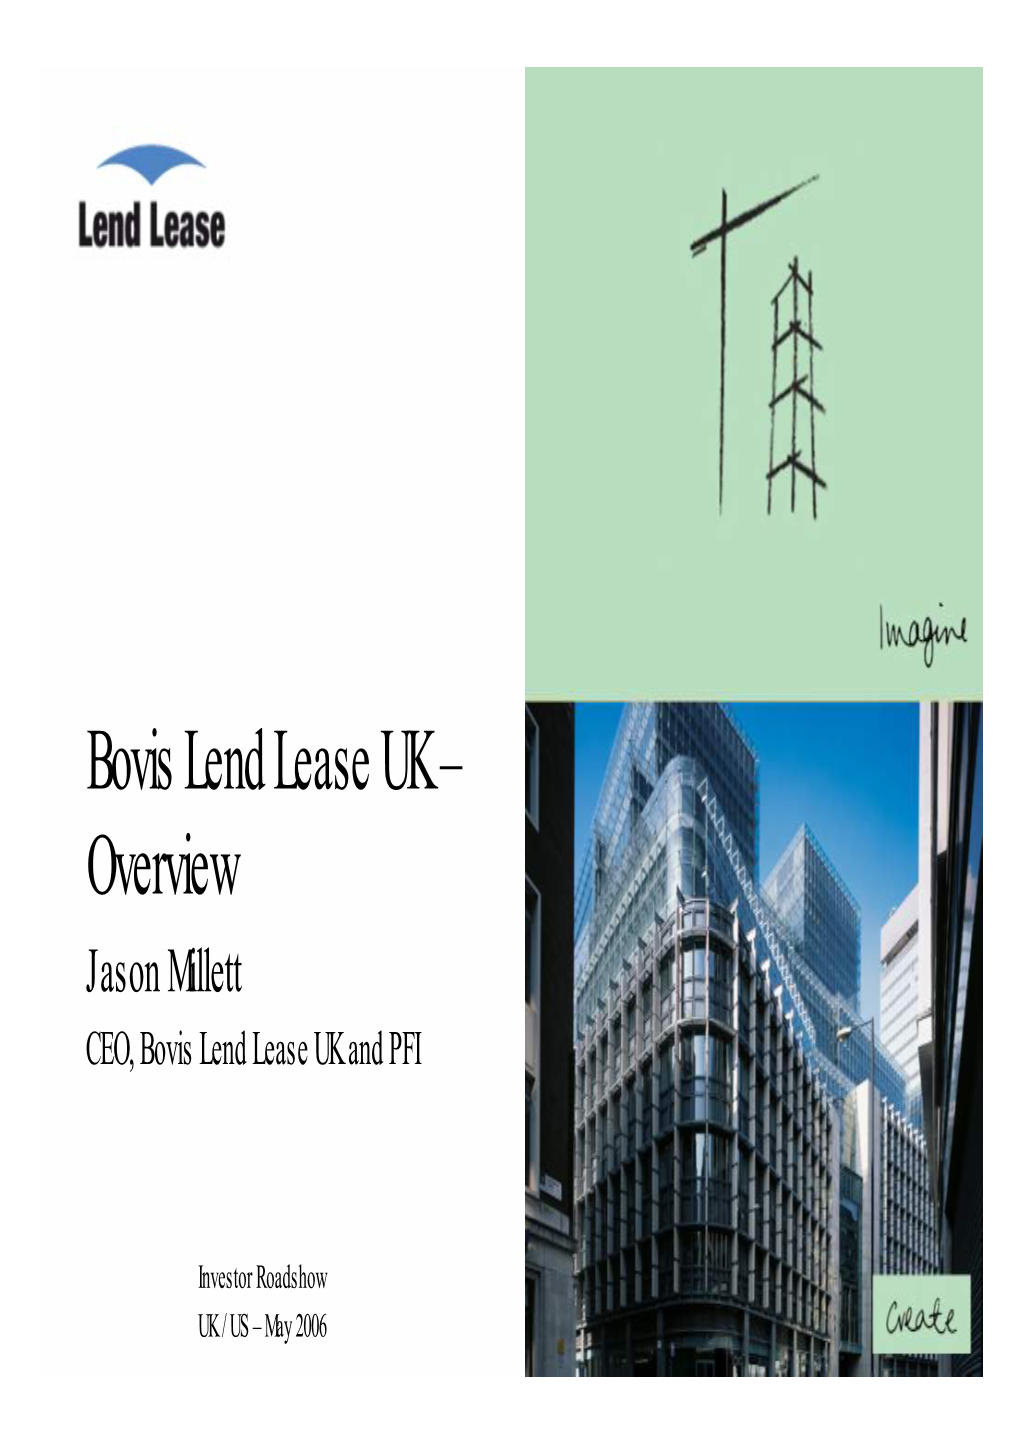 Bovis Lend Lease UK – Overview Jason Millett CEO, Bovis Lend Lease UK and PFI